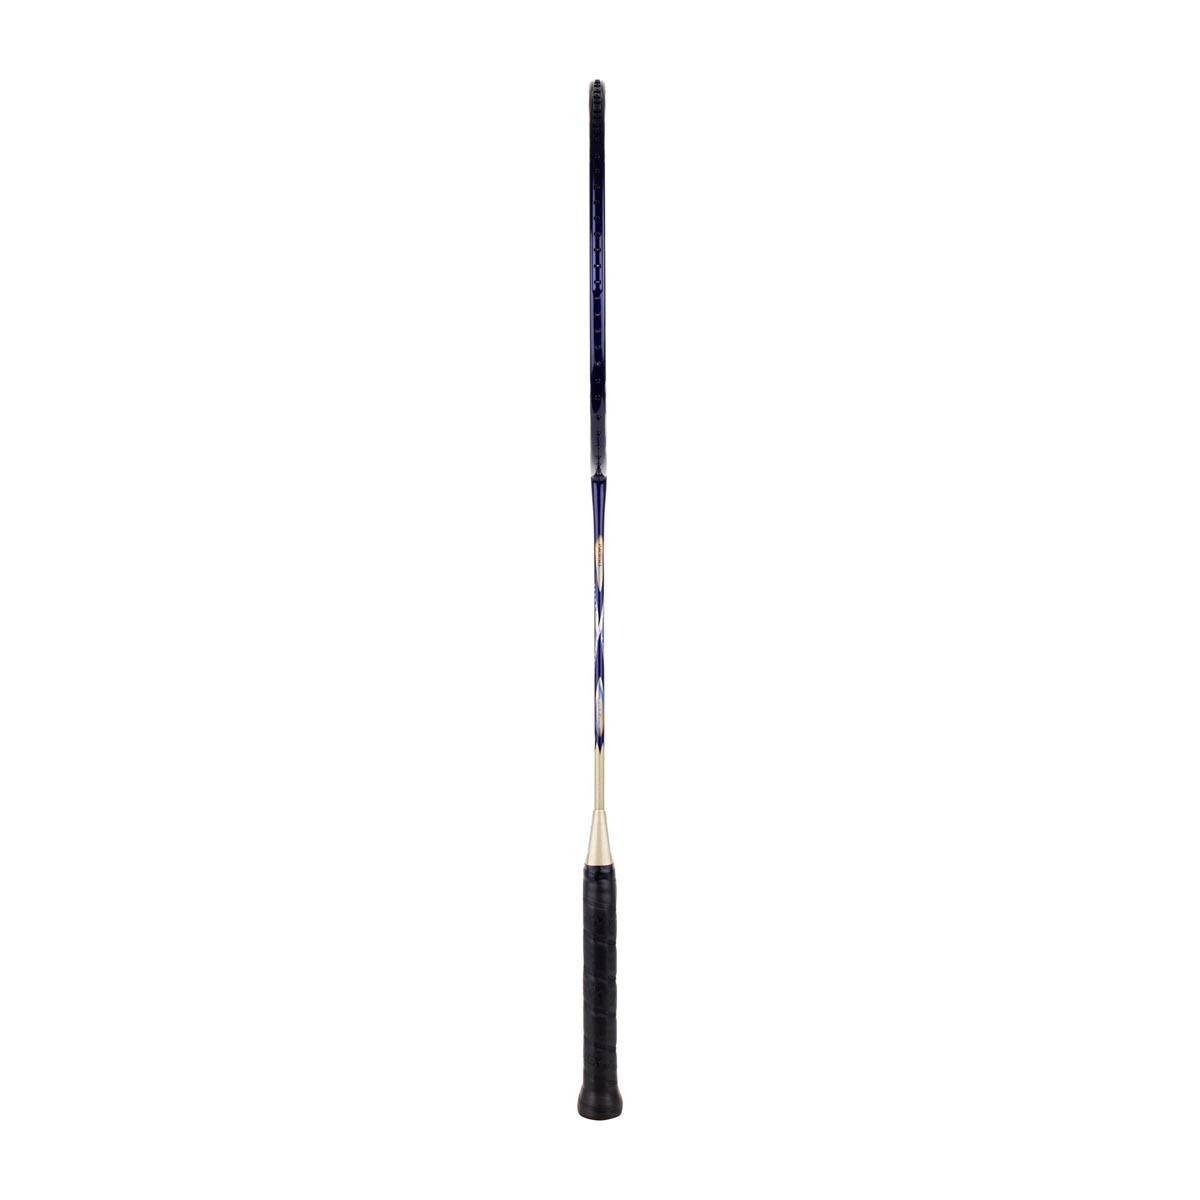 Badmintonschläger - YONEX - ASTROX 99Detailbild - 2